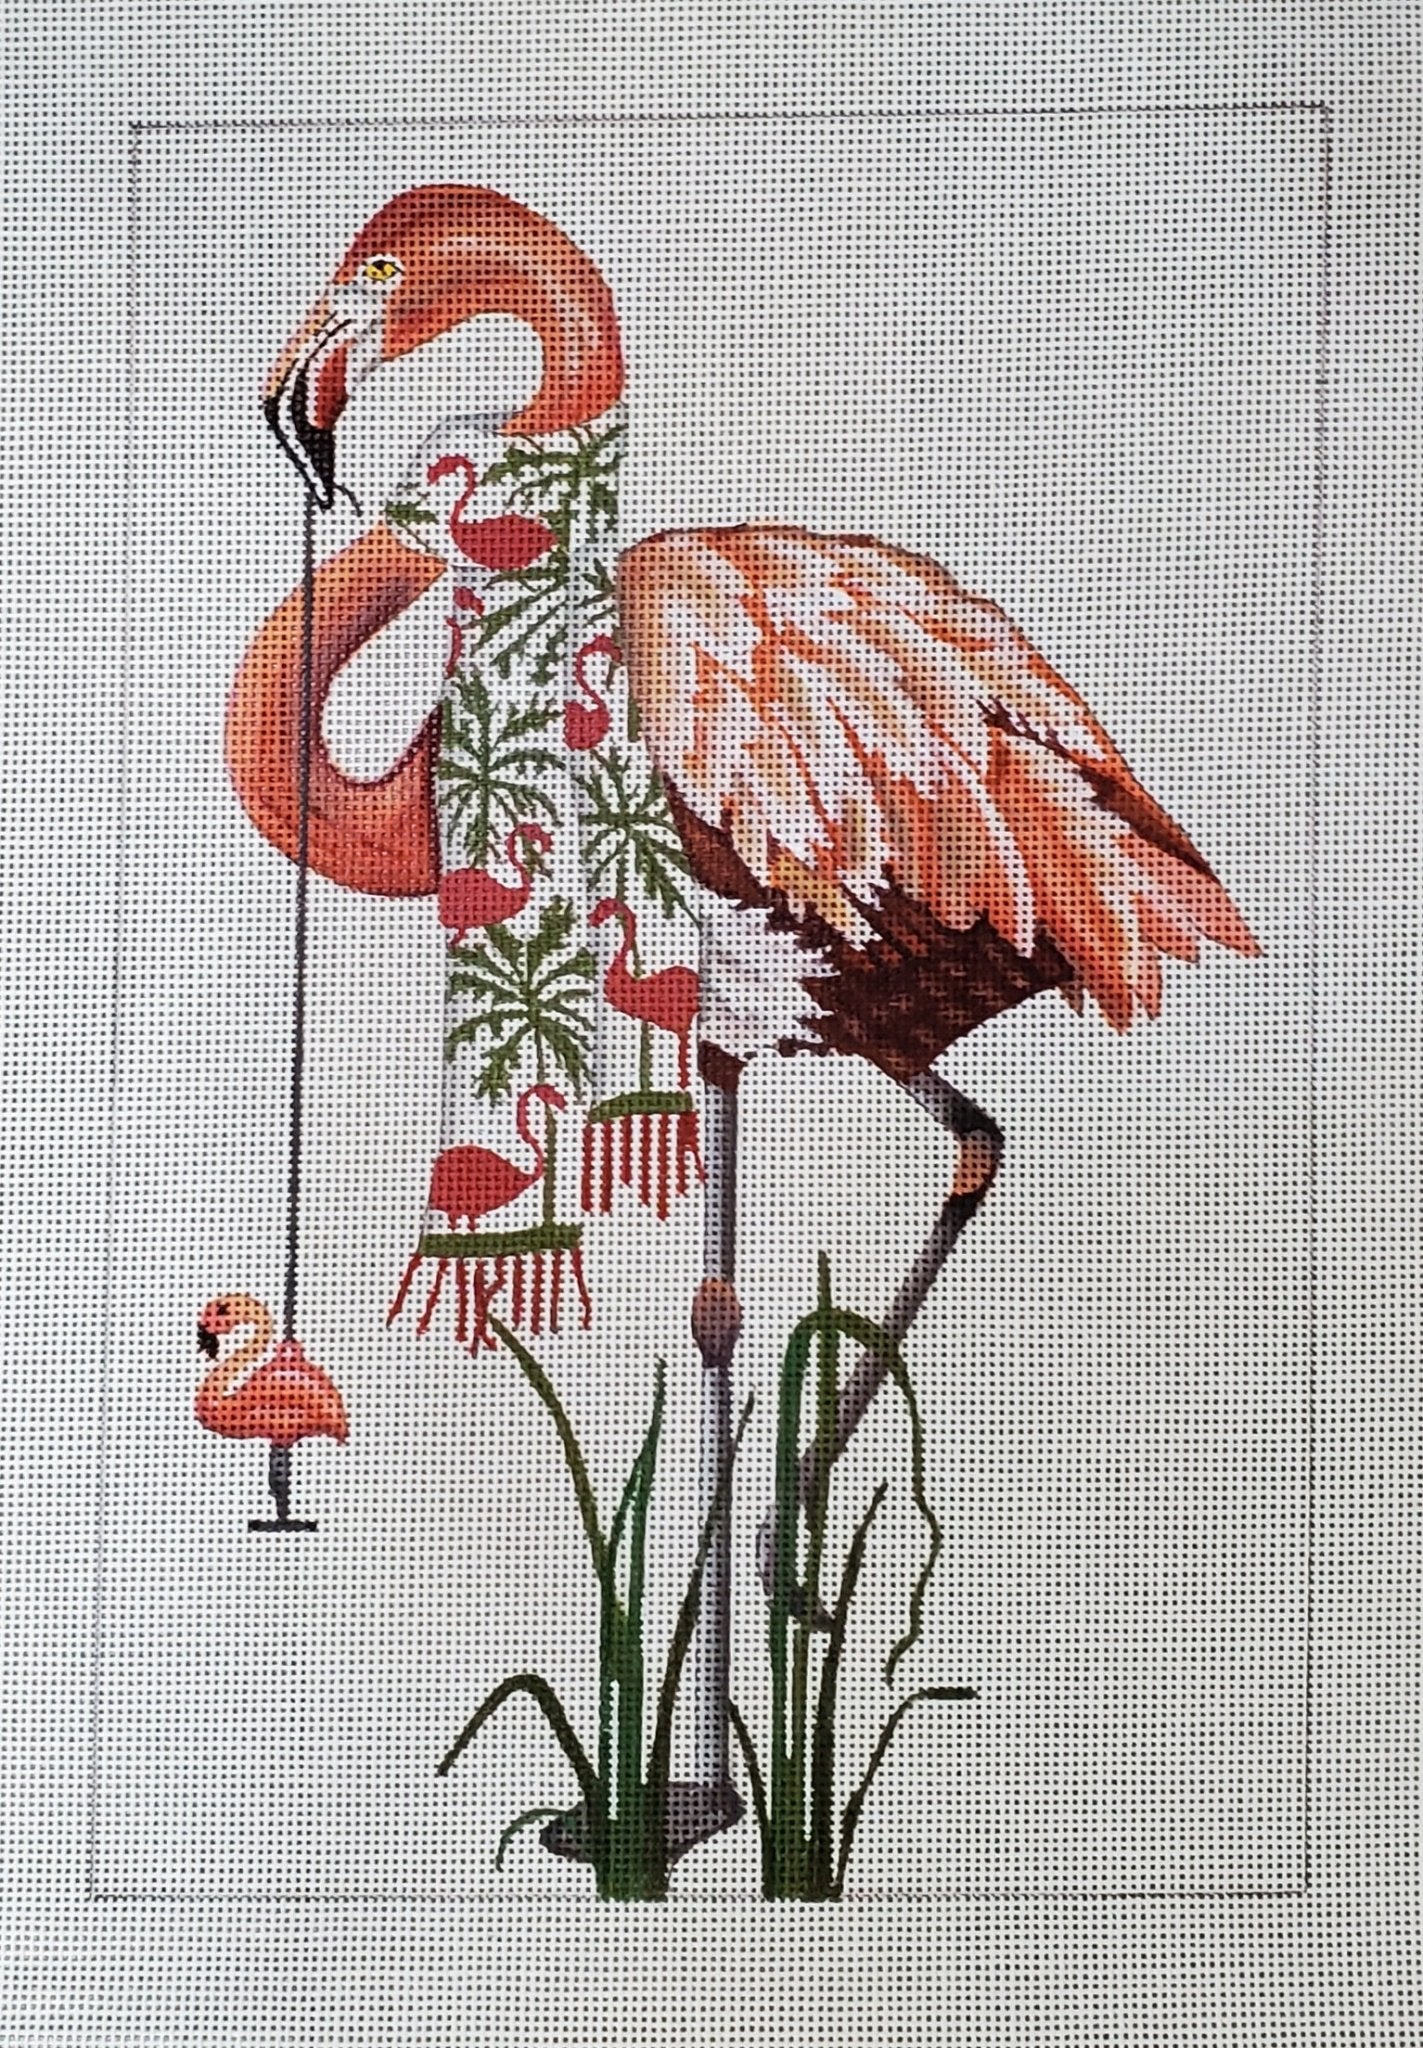 Winter Flamingo - The Flying Needles